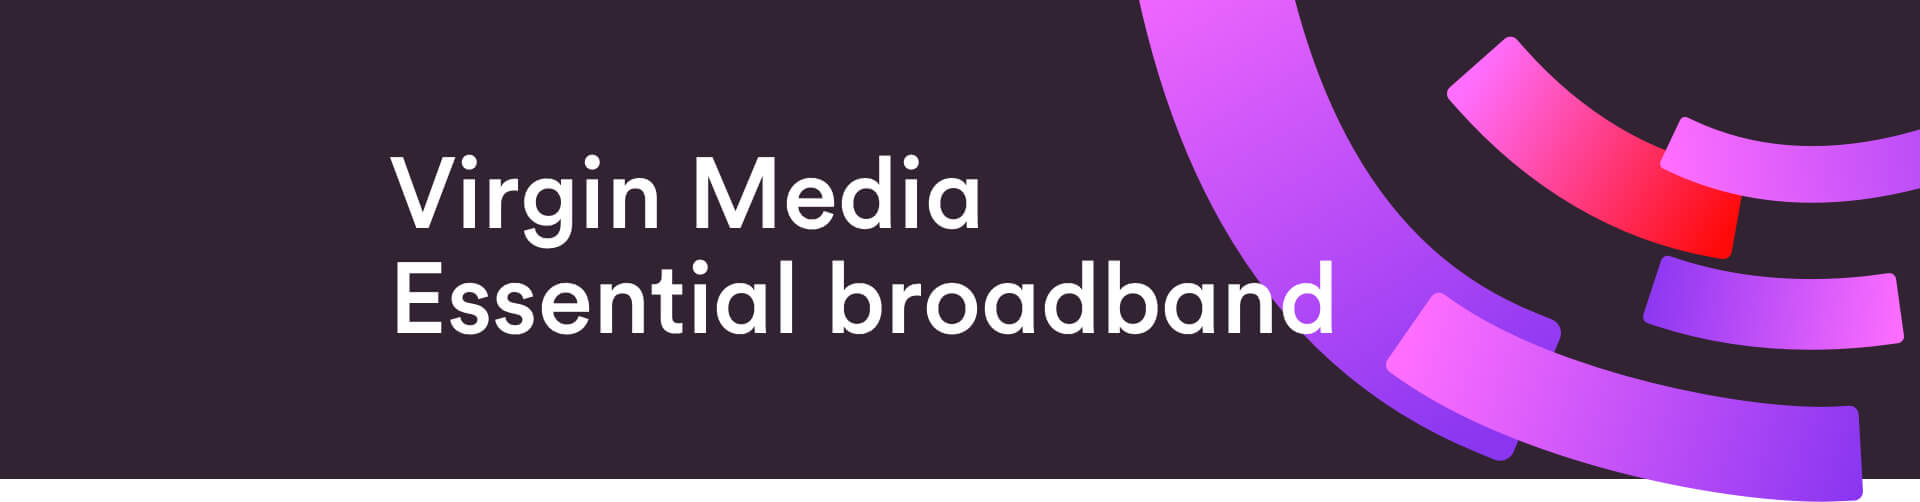 Virginmedia essential broadband banner